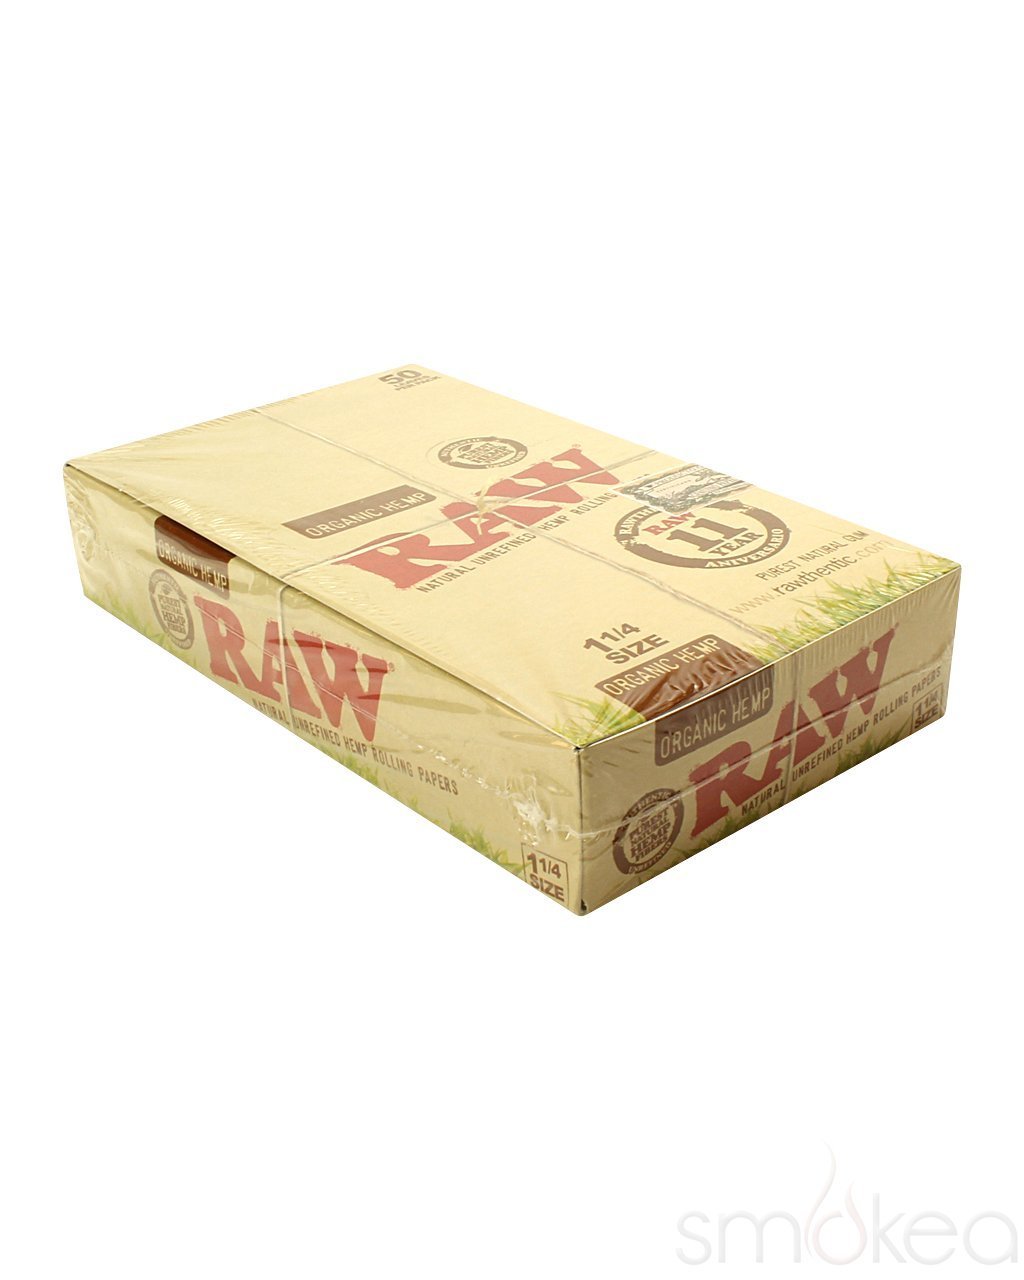 Raw Organic Hemp 1 1/4 Rolling Papers (Full Box) - Bittchaser Smoke Shop